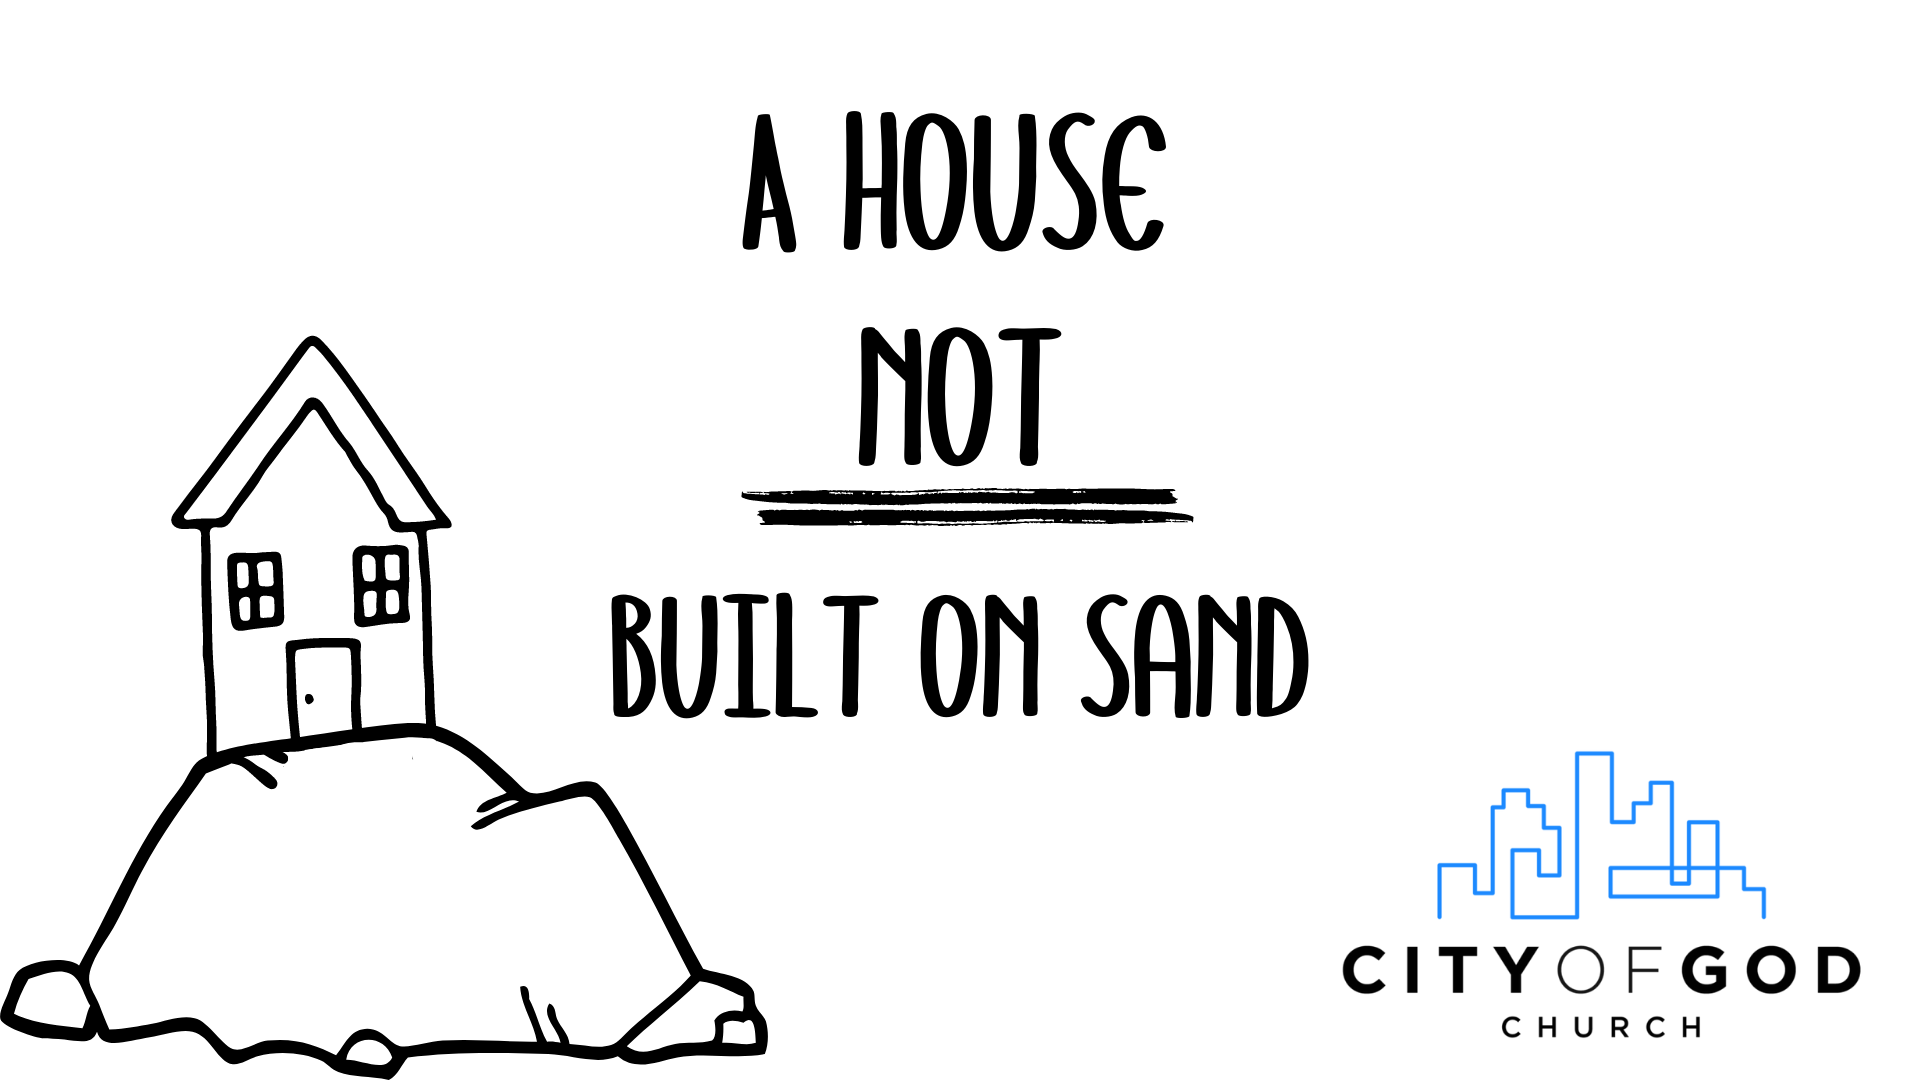 A House NOT Built on Sand